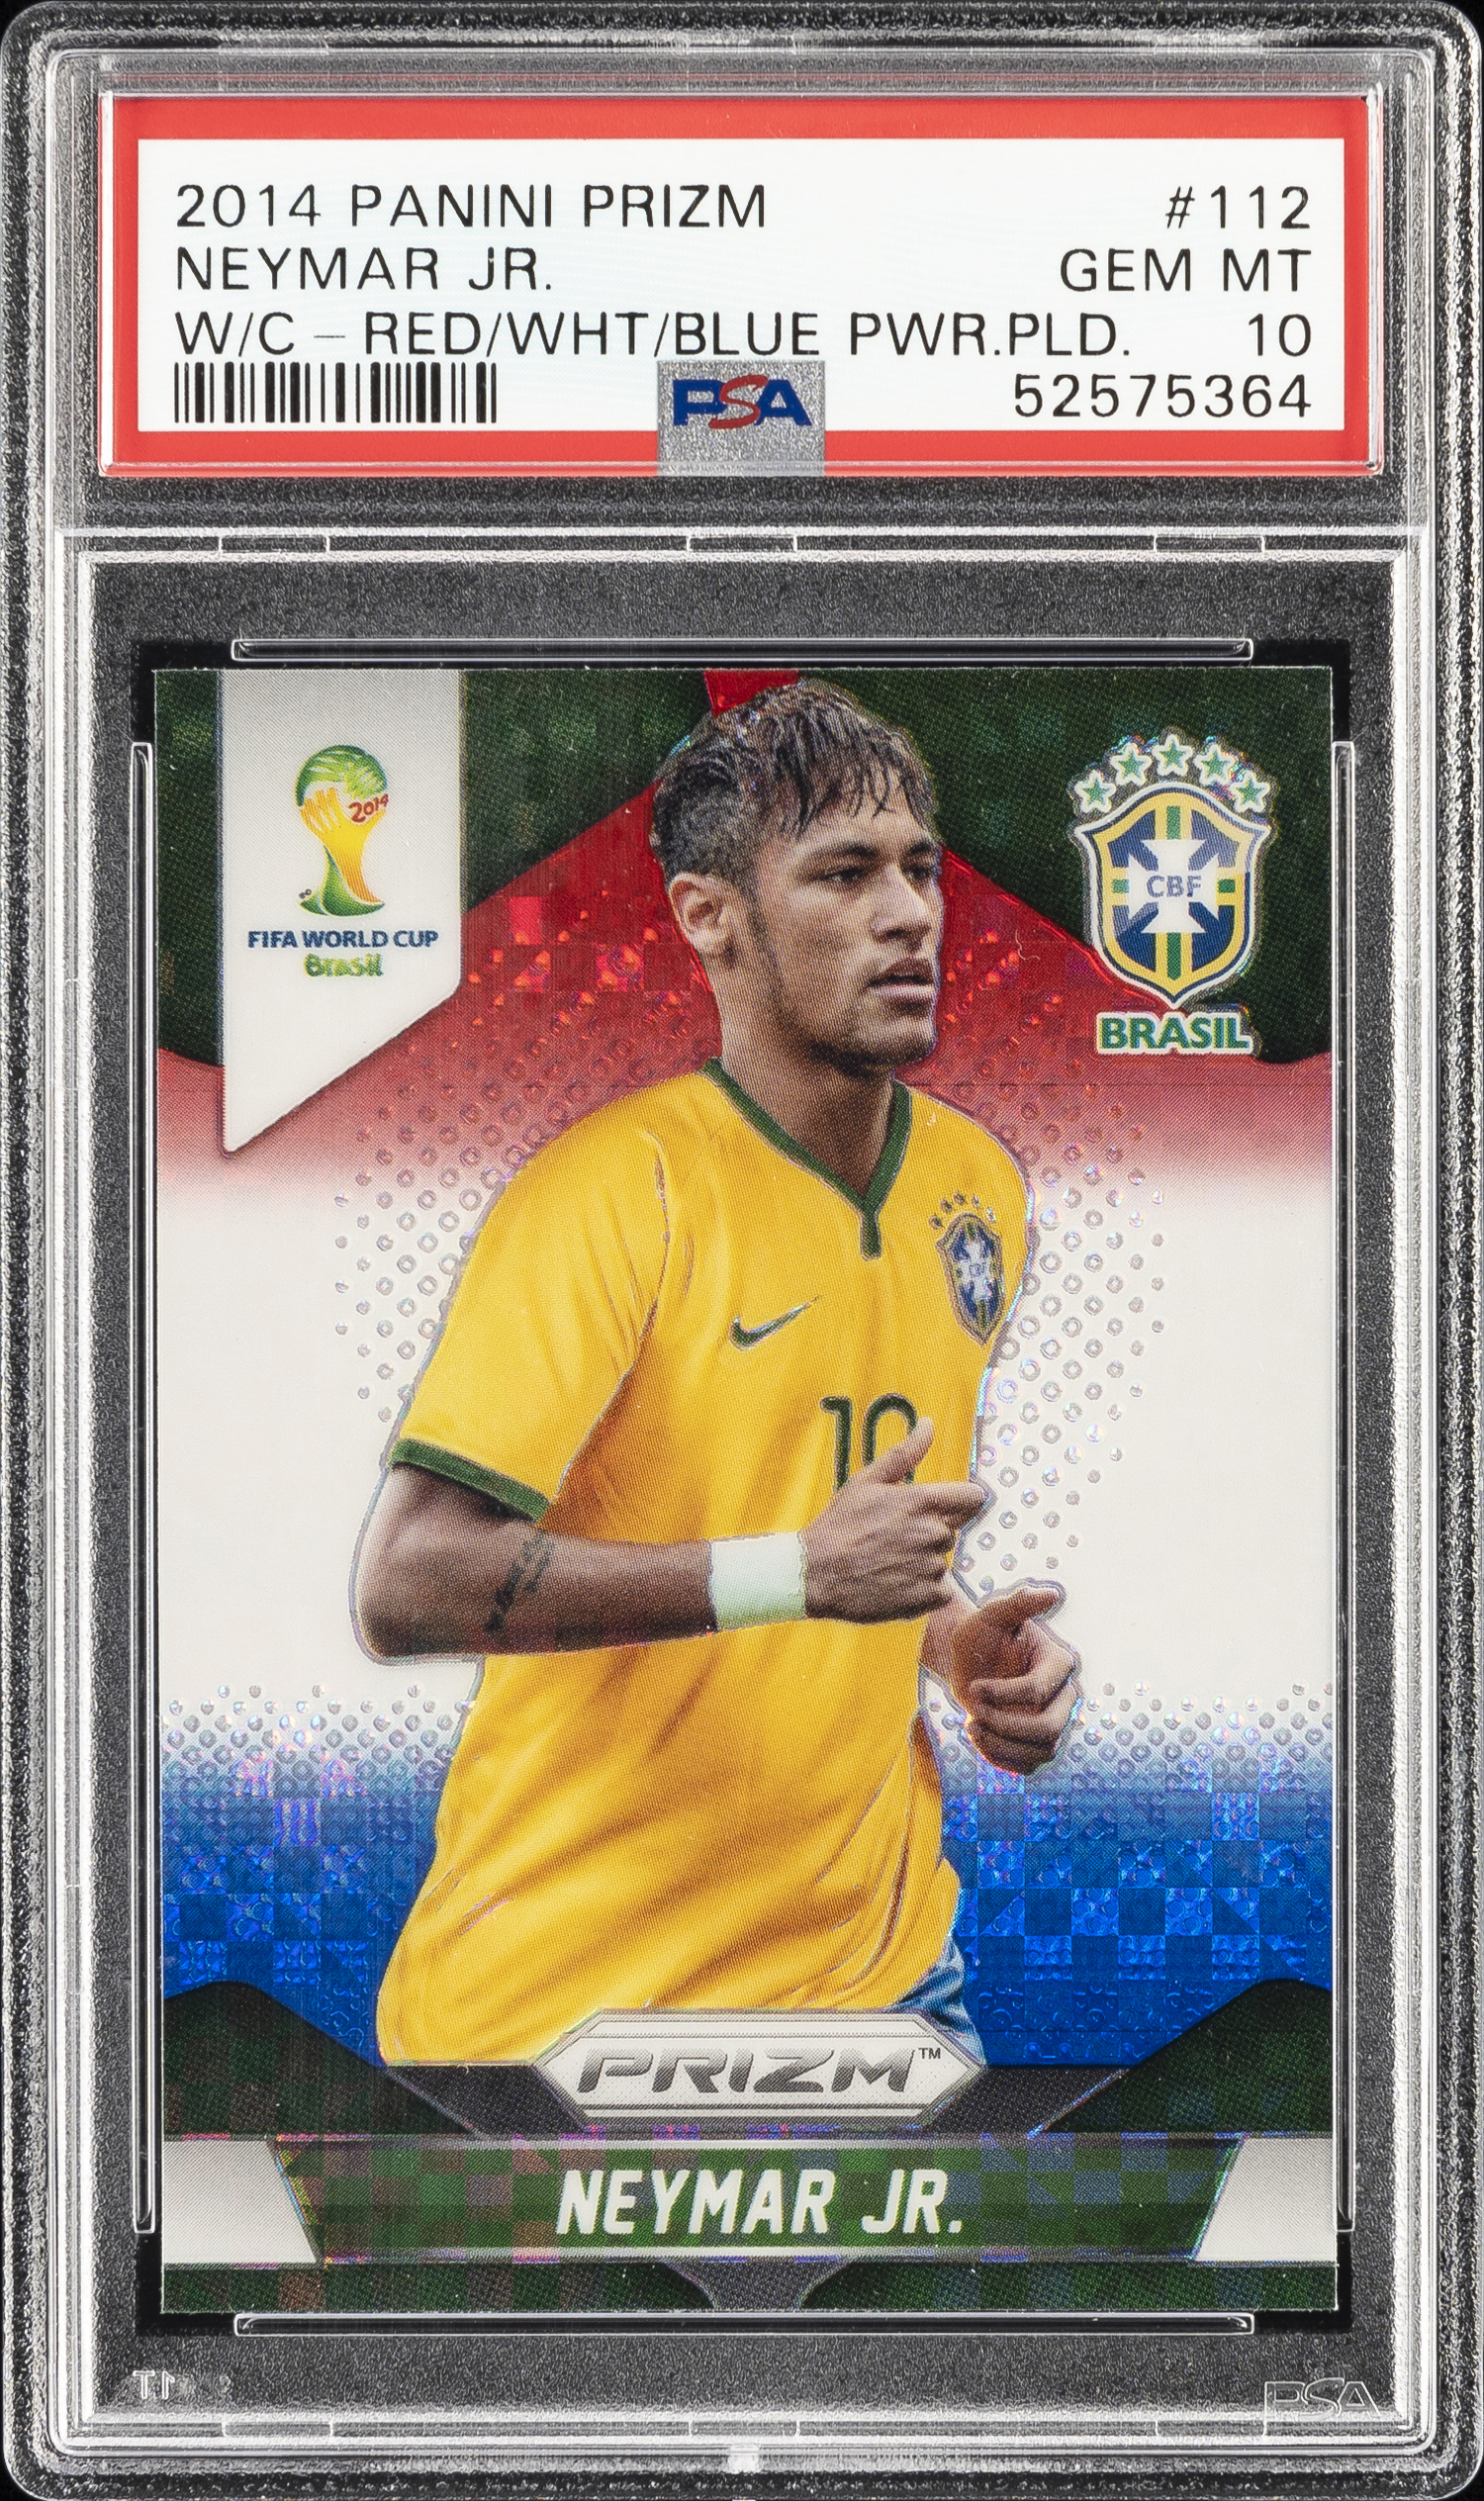 2014 Panini Prizm World Cup Red/White/Blue Power Plaid #112 Neymar Jr. – PSA GEM MT 10